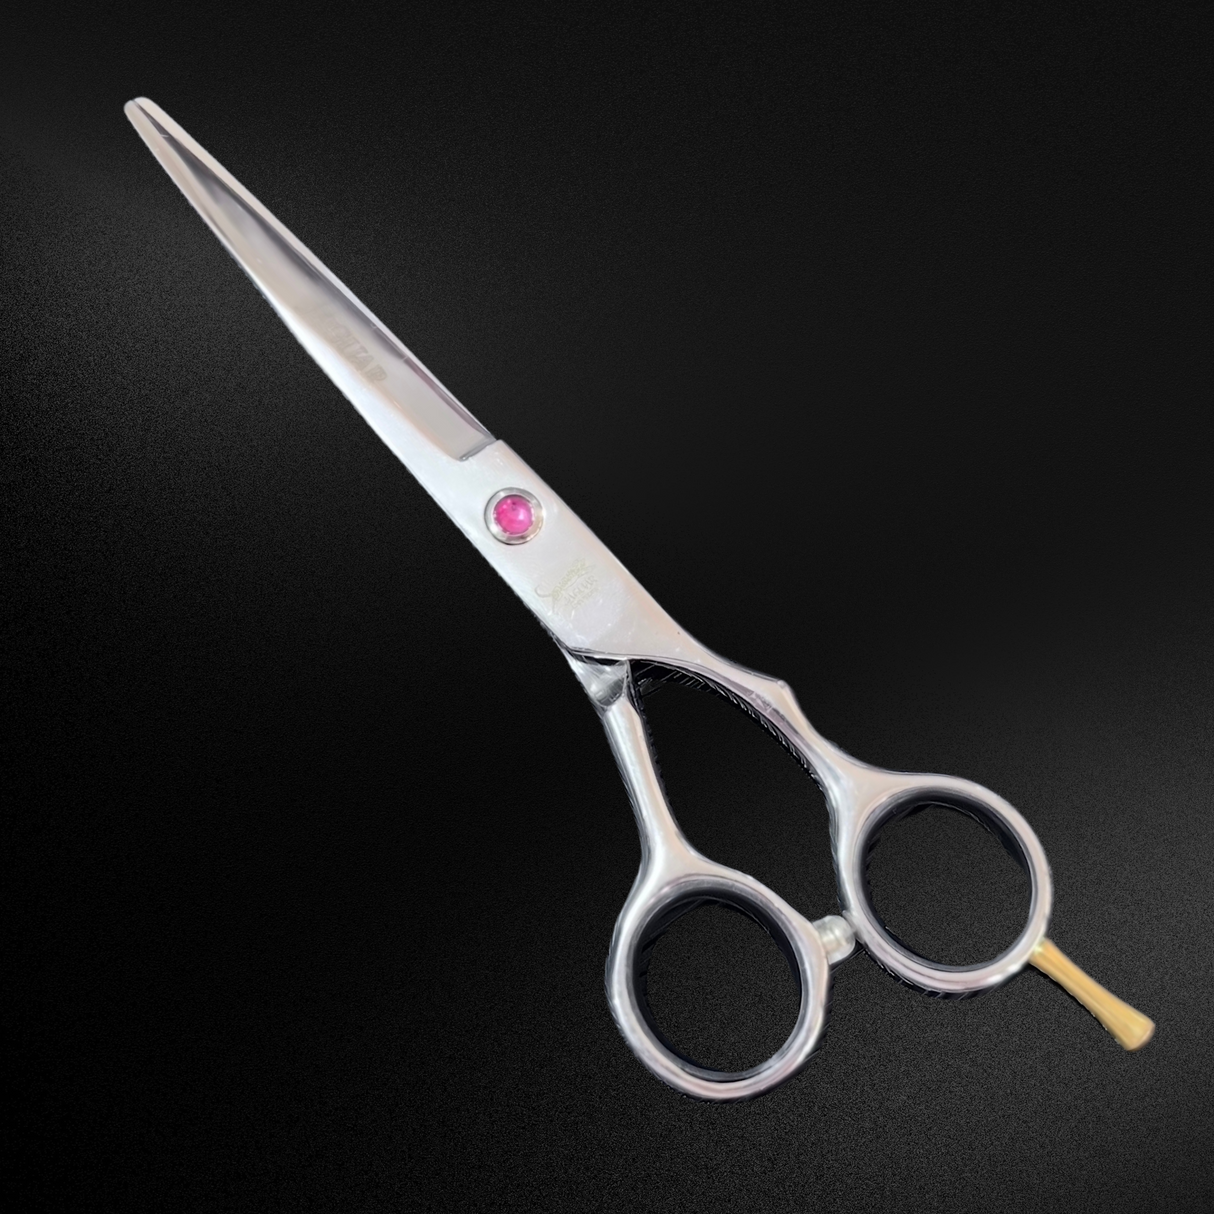 Jaguar Stainless Professional Hair Scissor - 6”inches